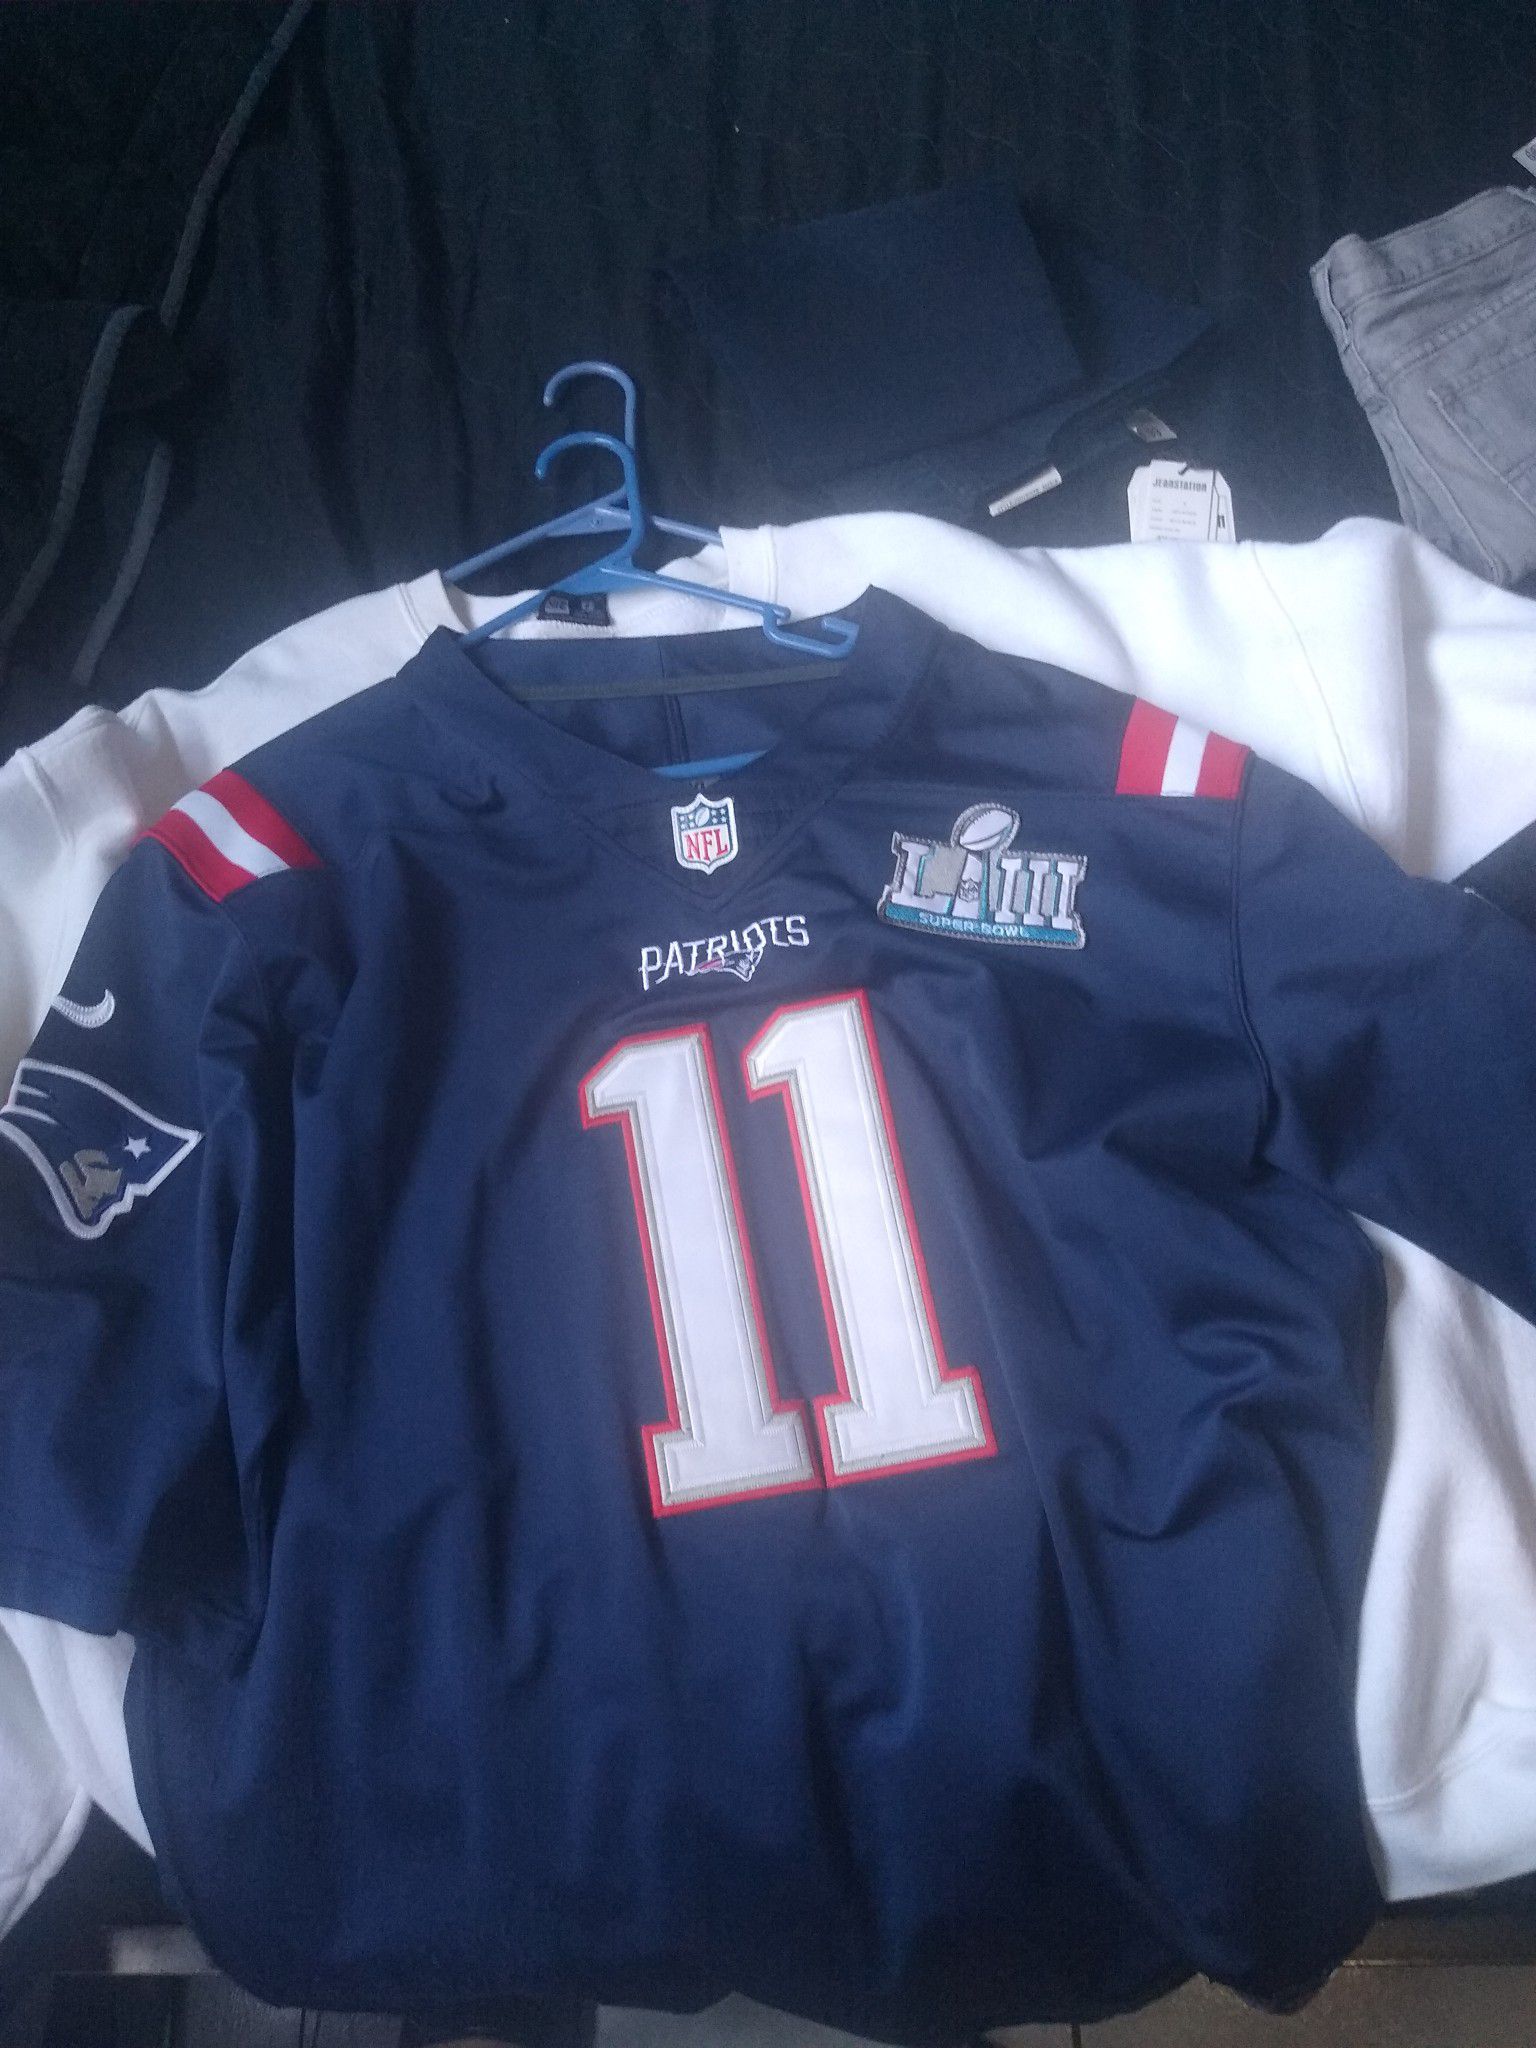 New England Patriots #11 Edelman nike jersey